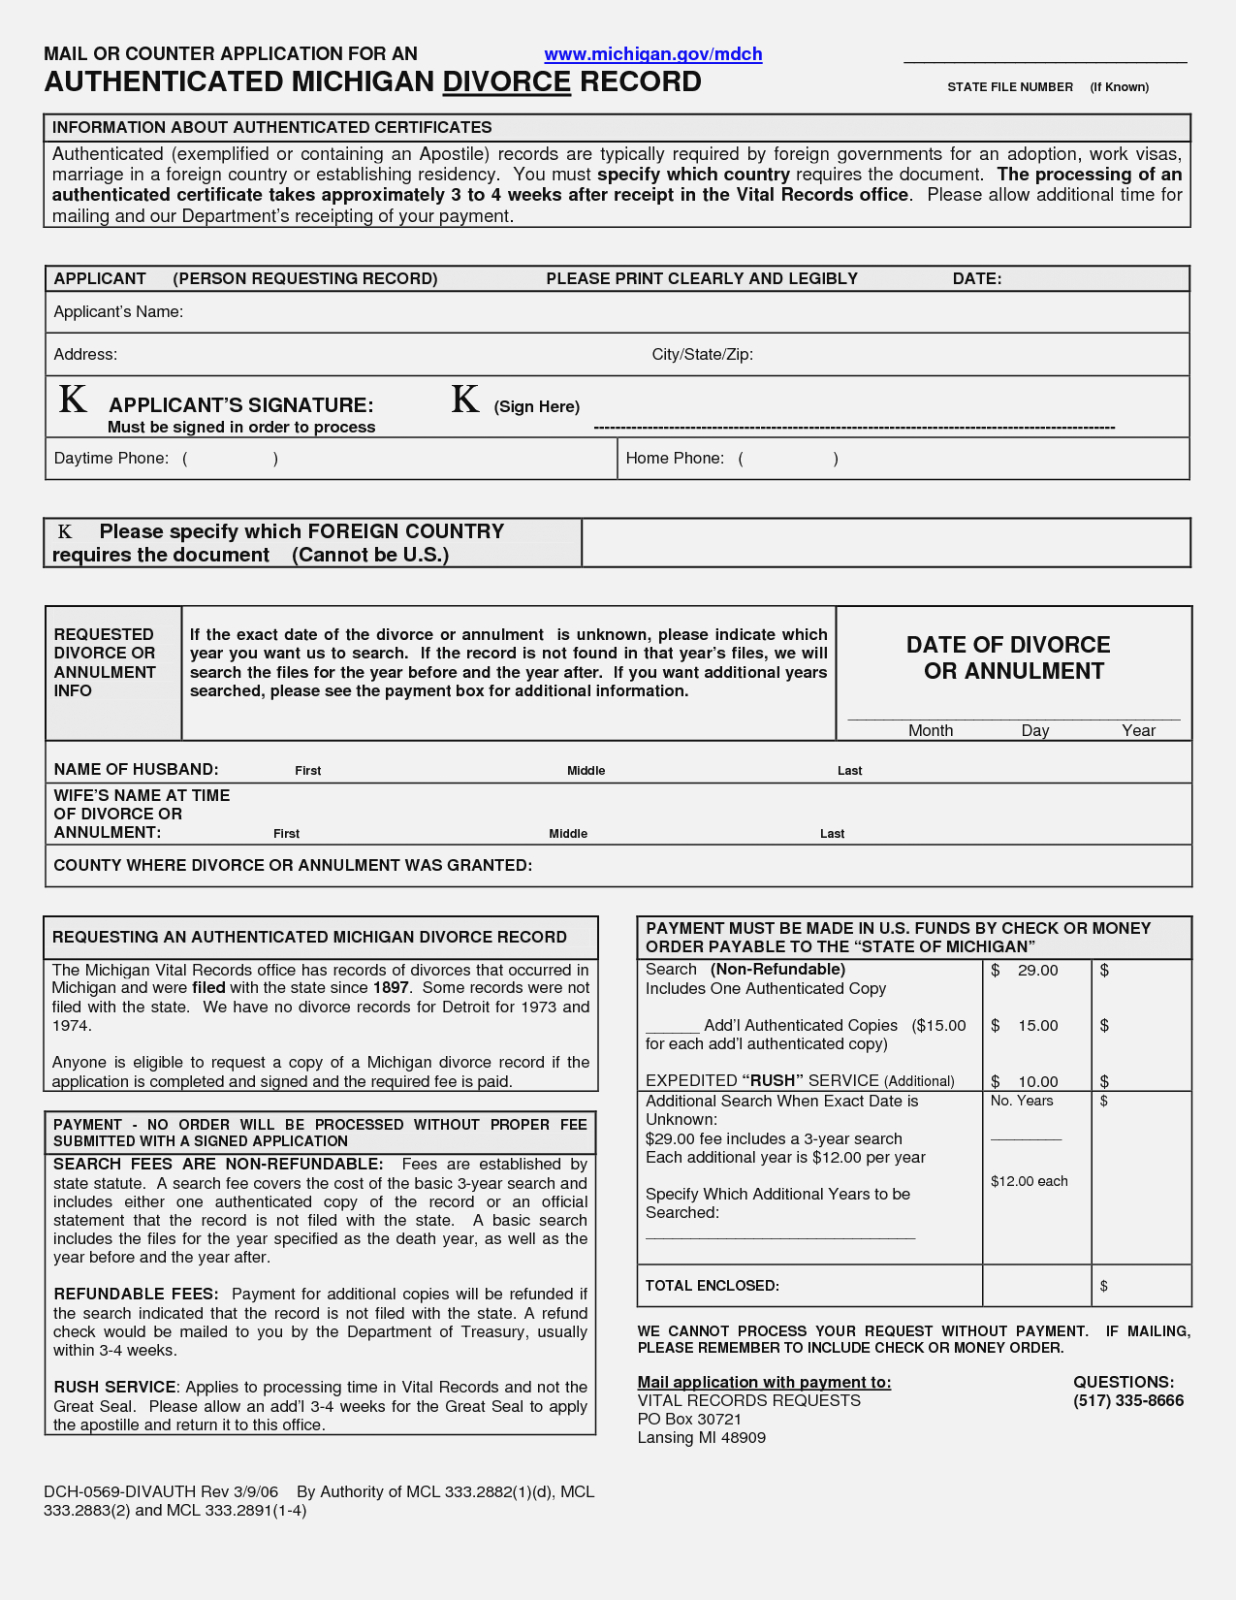 Free Printable Nj Divorce Forms | Free Printable